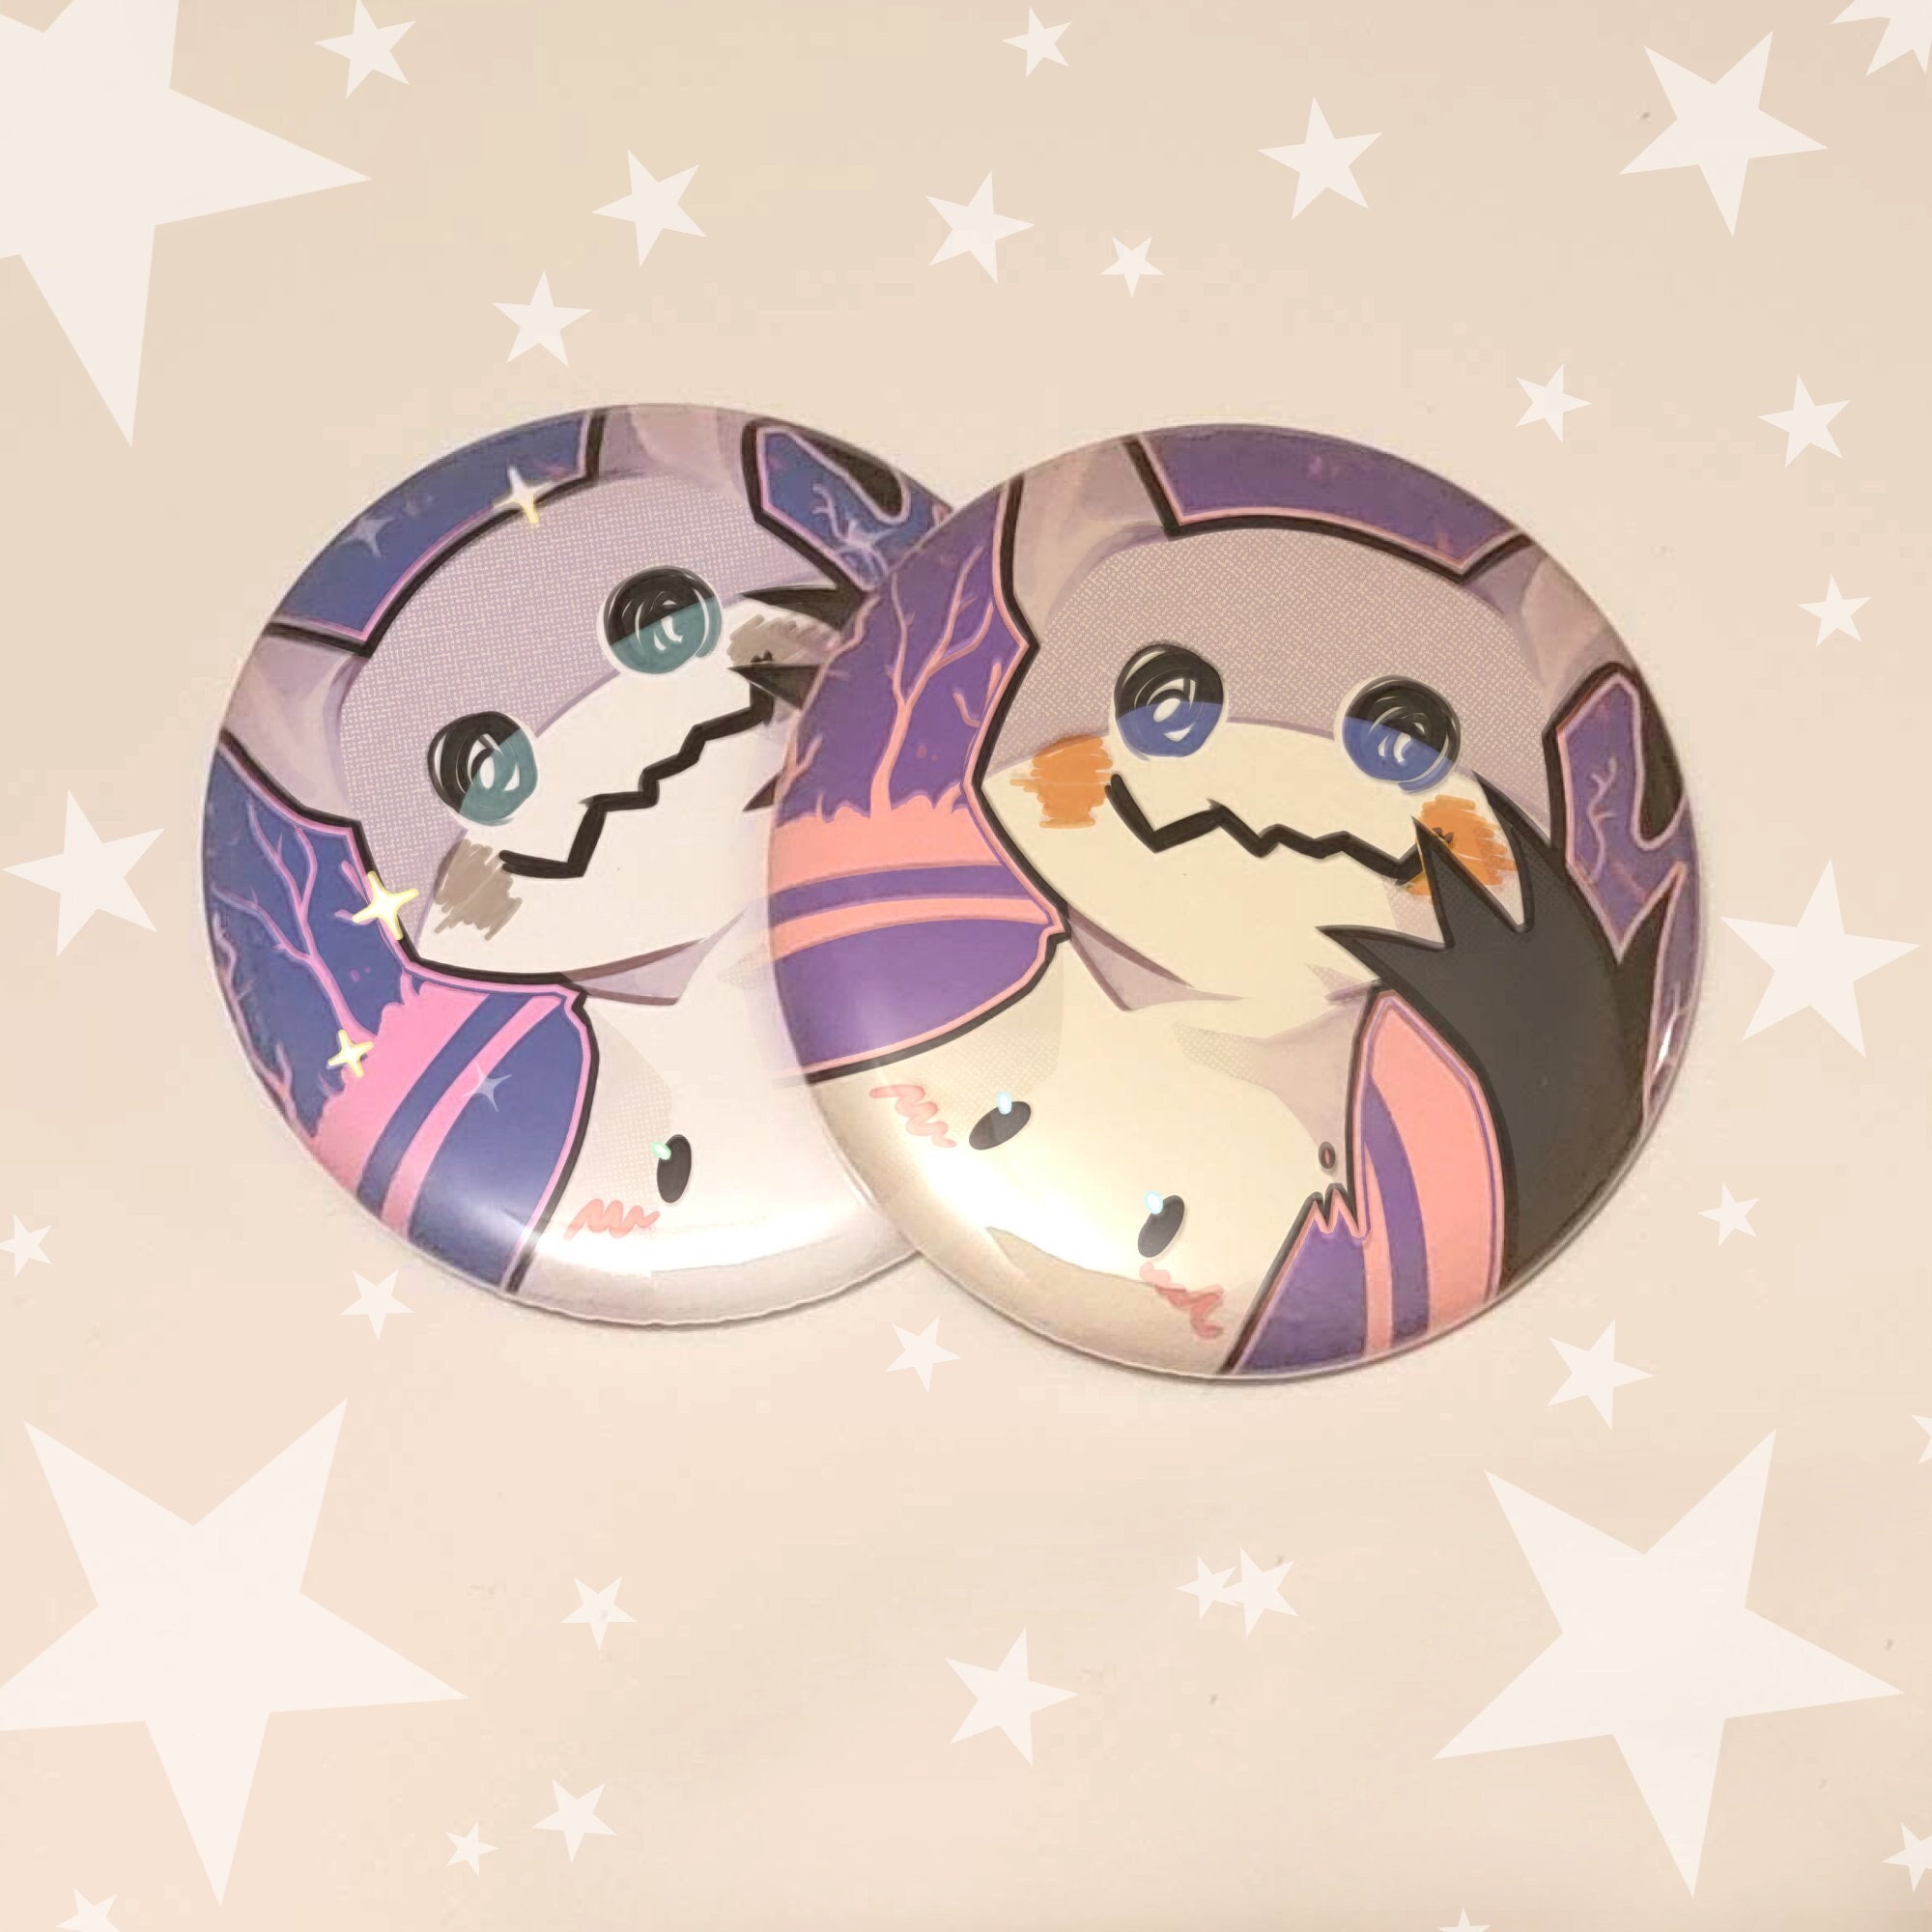 Shiny Mimikyu Sticker - Teddymuffs Designs